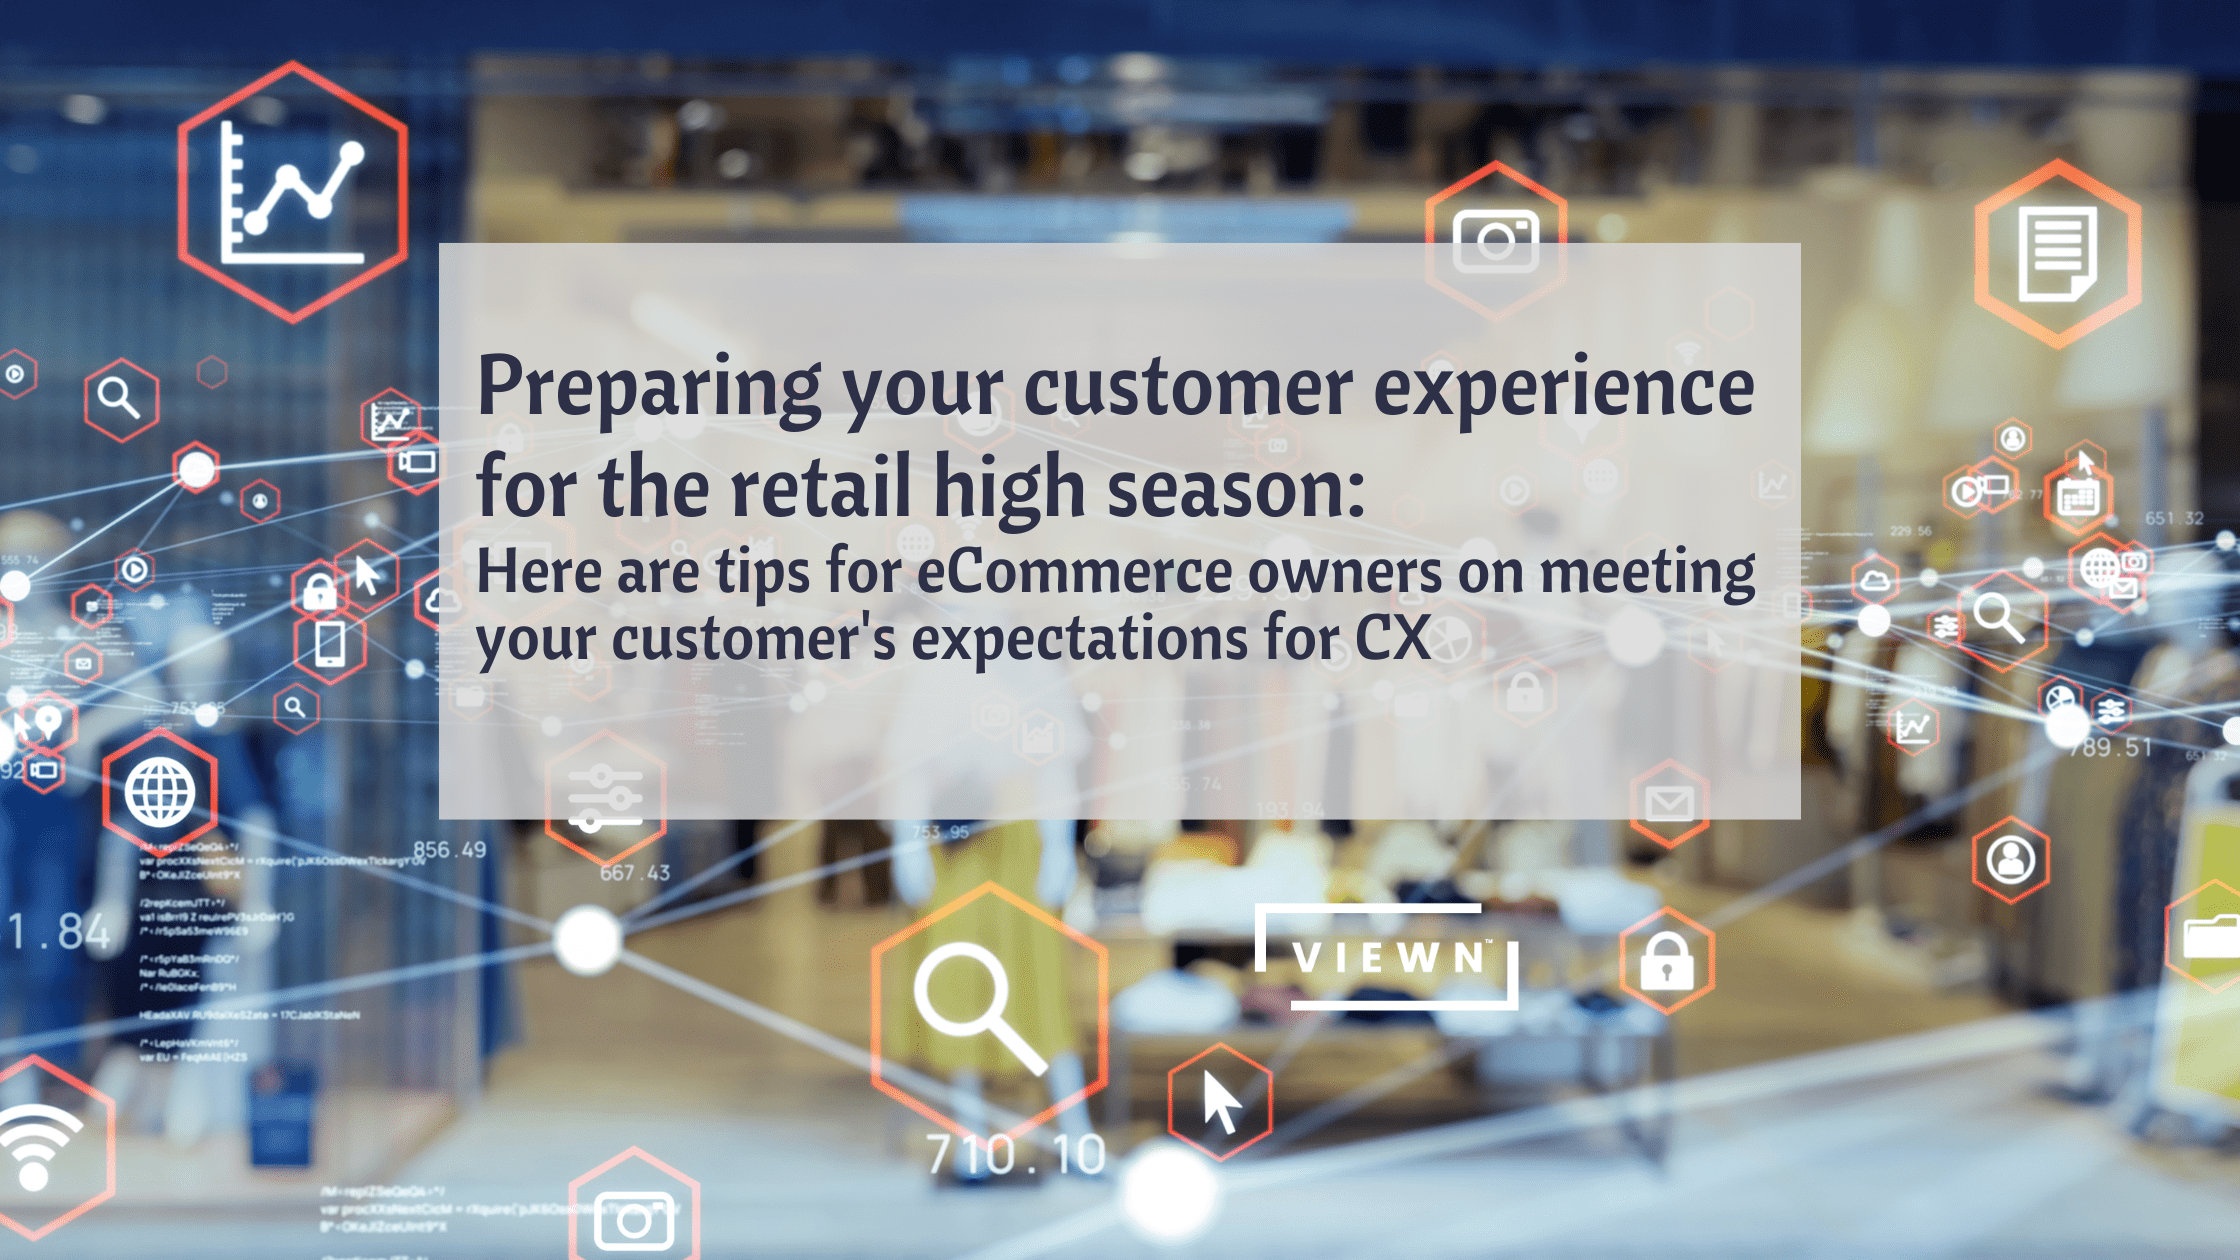 Preparing you customer experiences for the retail high season